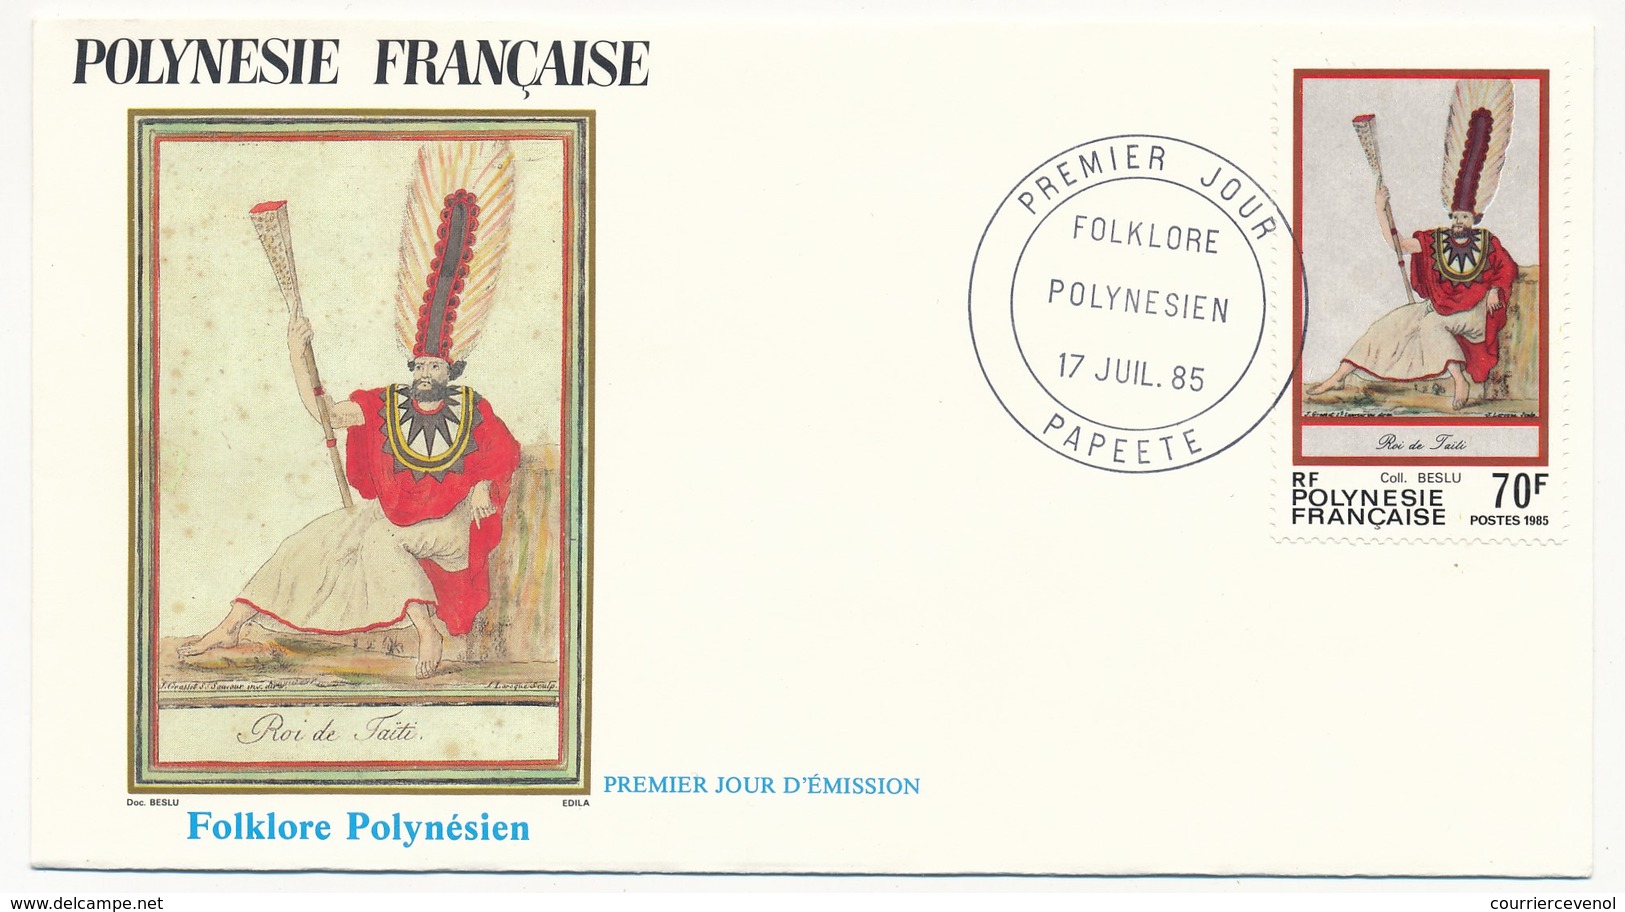 POLYNESIE FRANCAISE - 3 FDC - Folklore Polynésien - 17 Juillet 1985 - Papeete - FDC